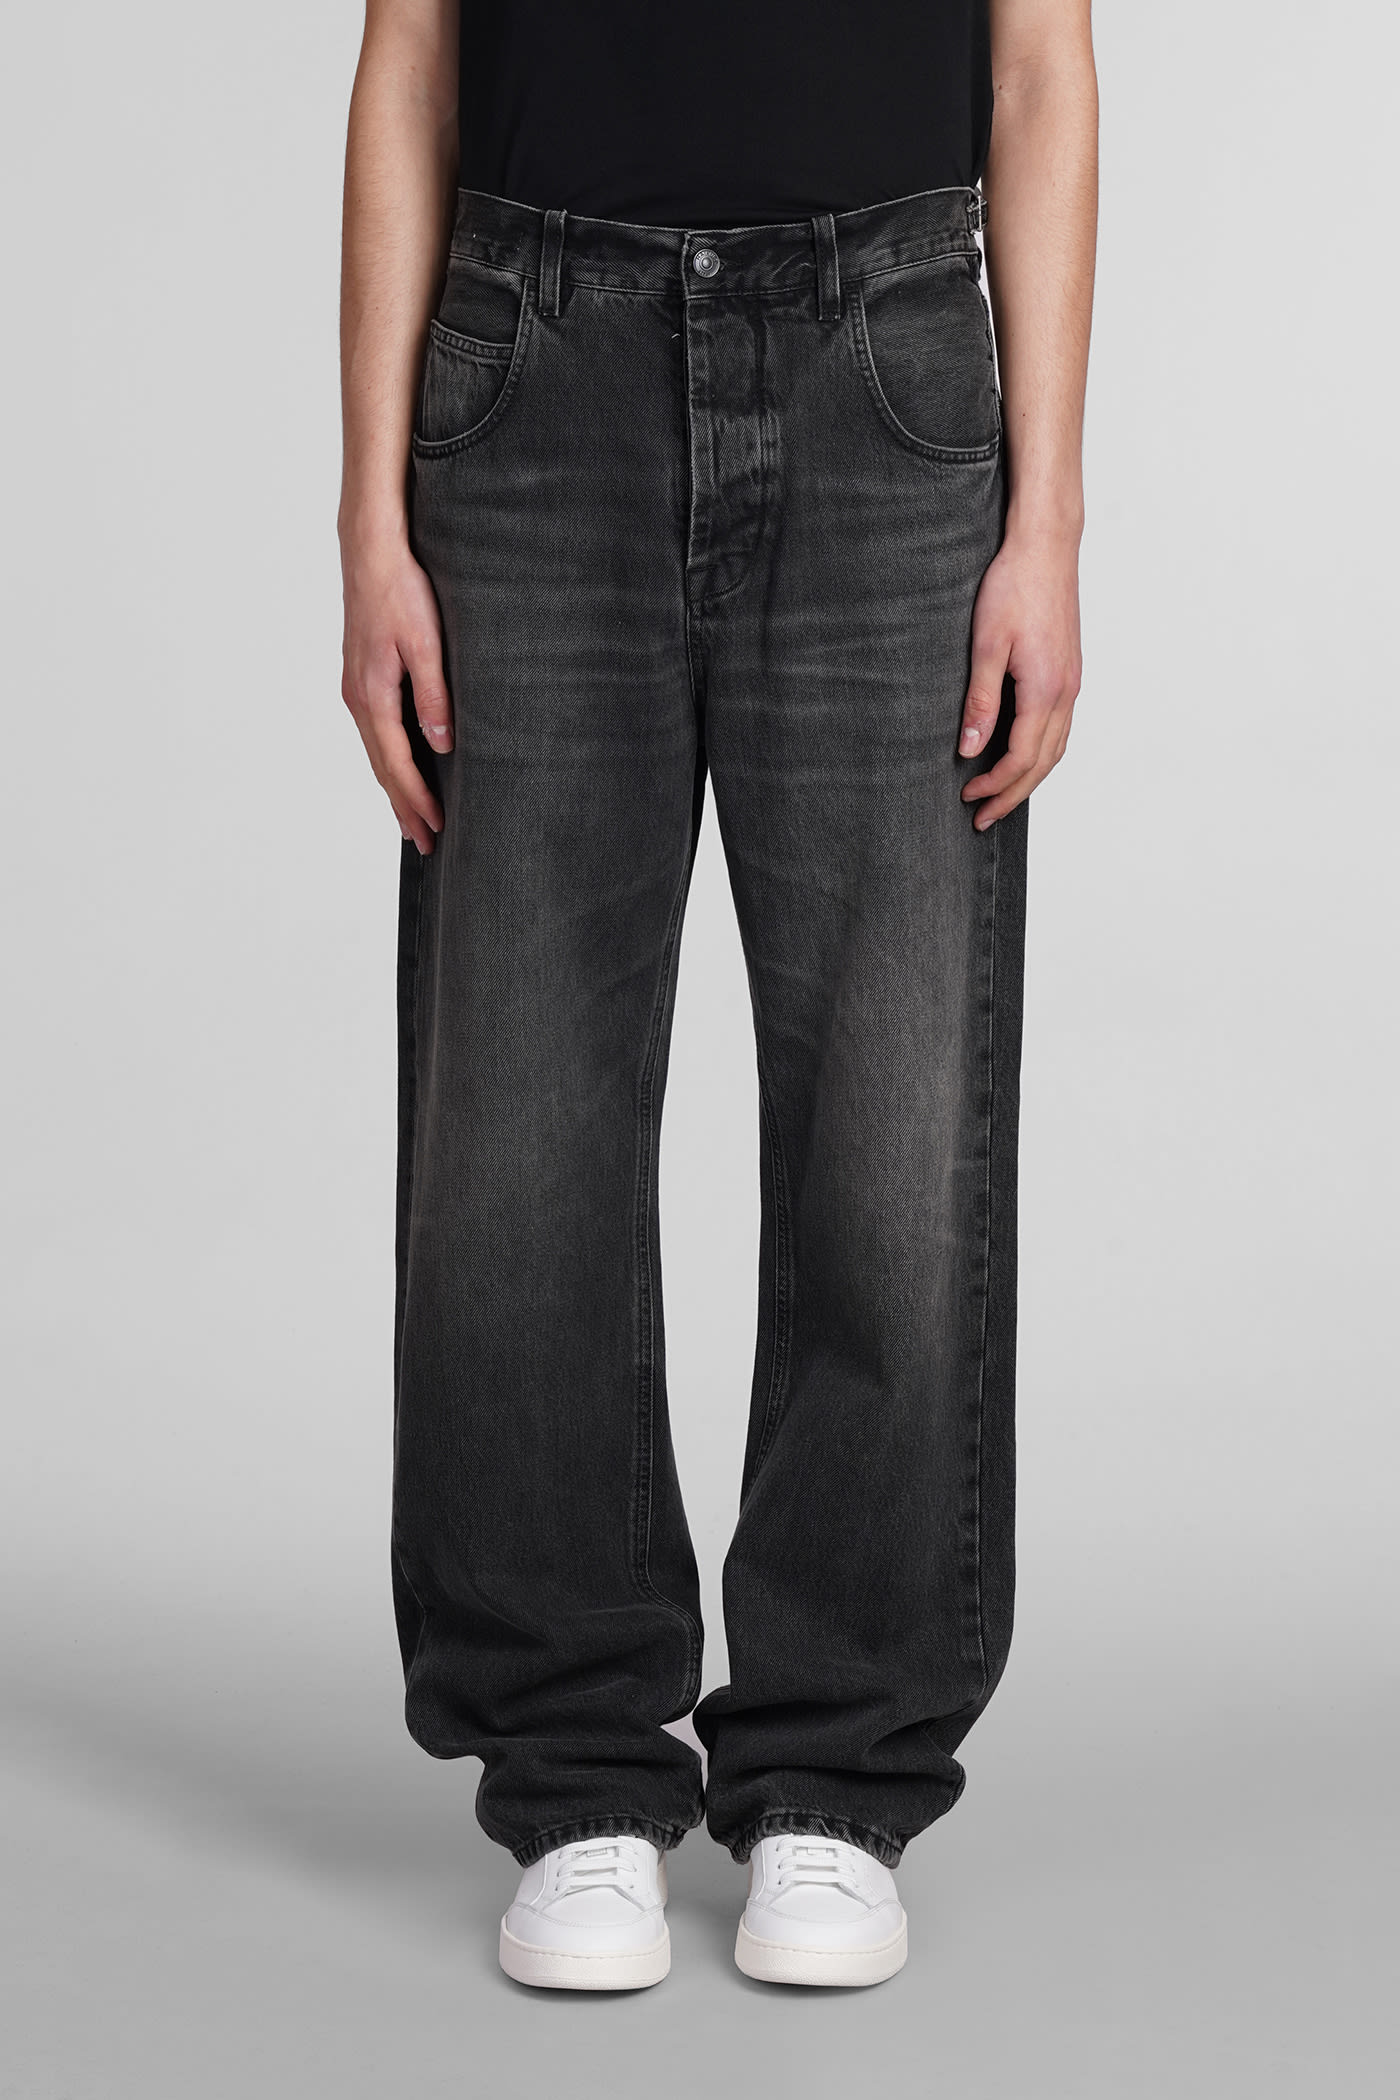 Logan Jeans In Black Cotton